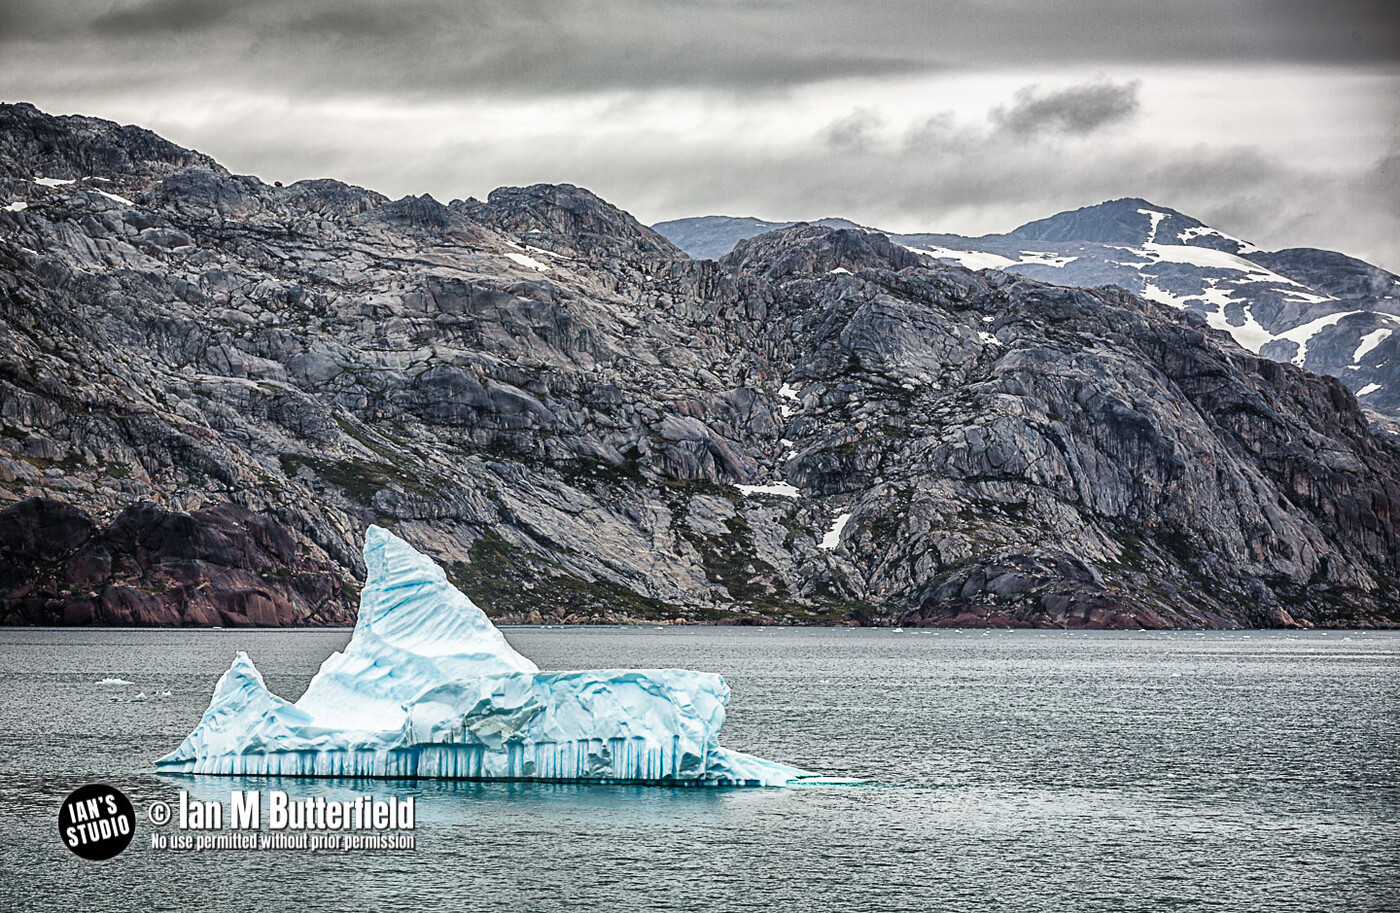 photographer ianbutty landscape modelling photo taken at Prince Christian Sund Passage, Greenland